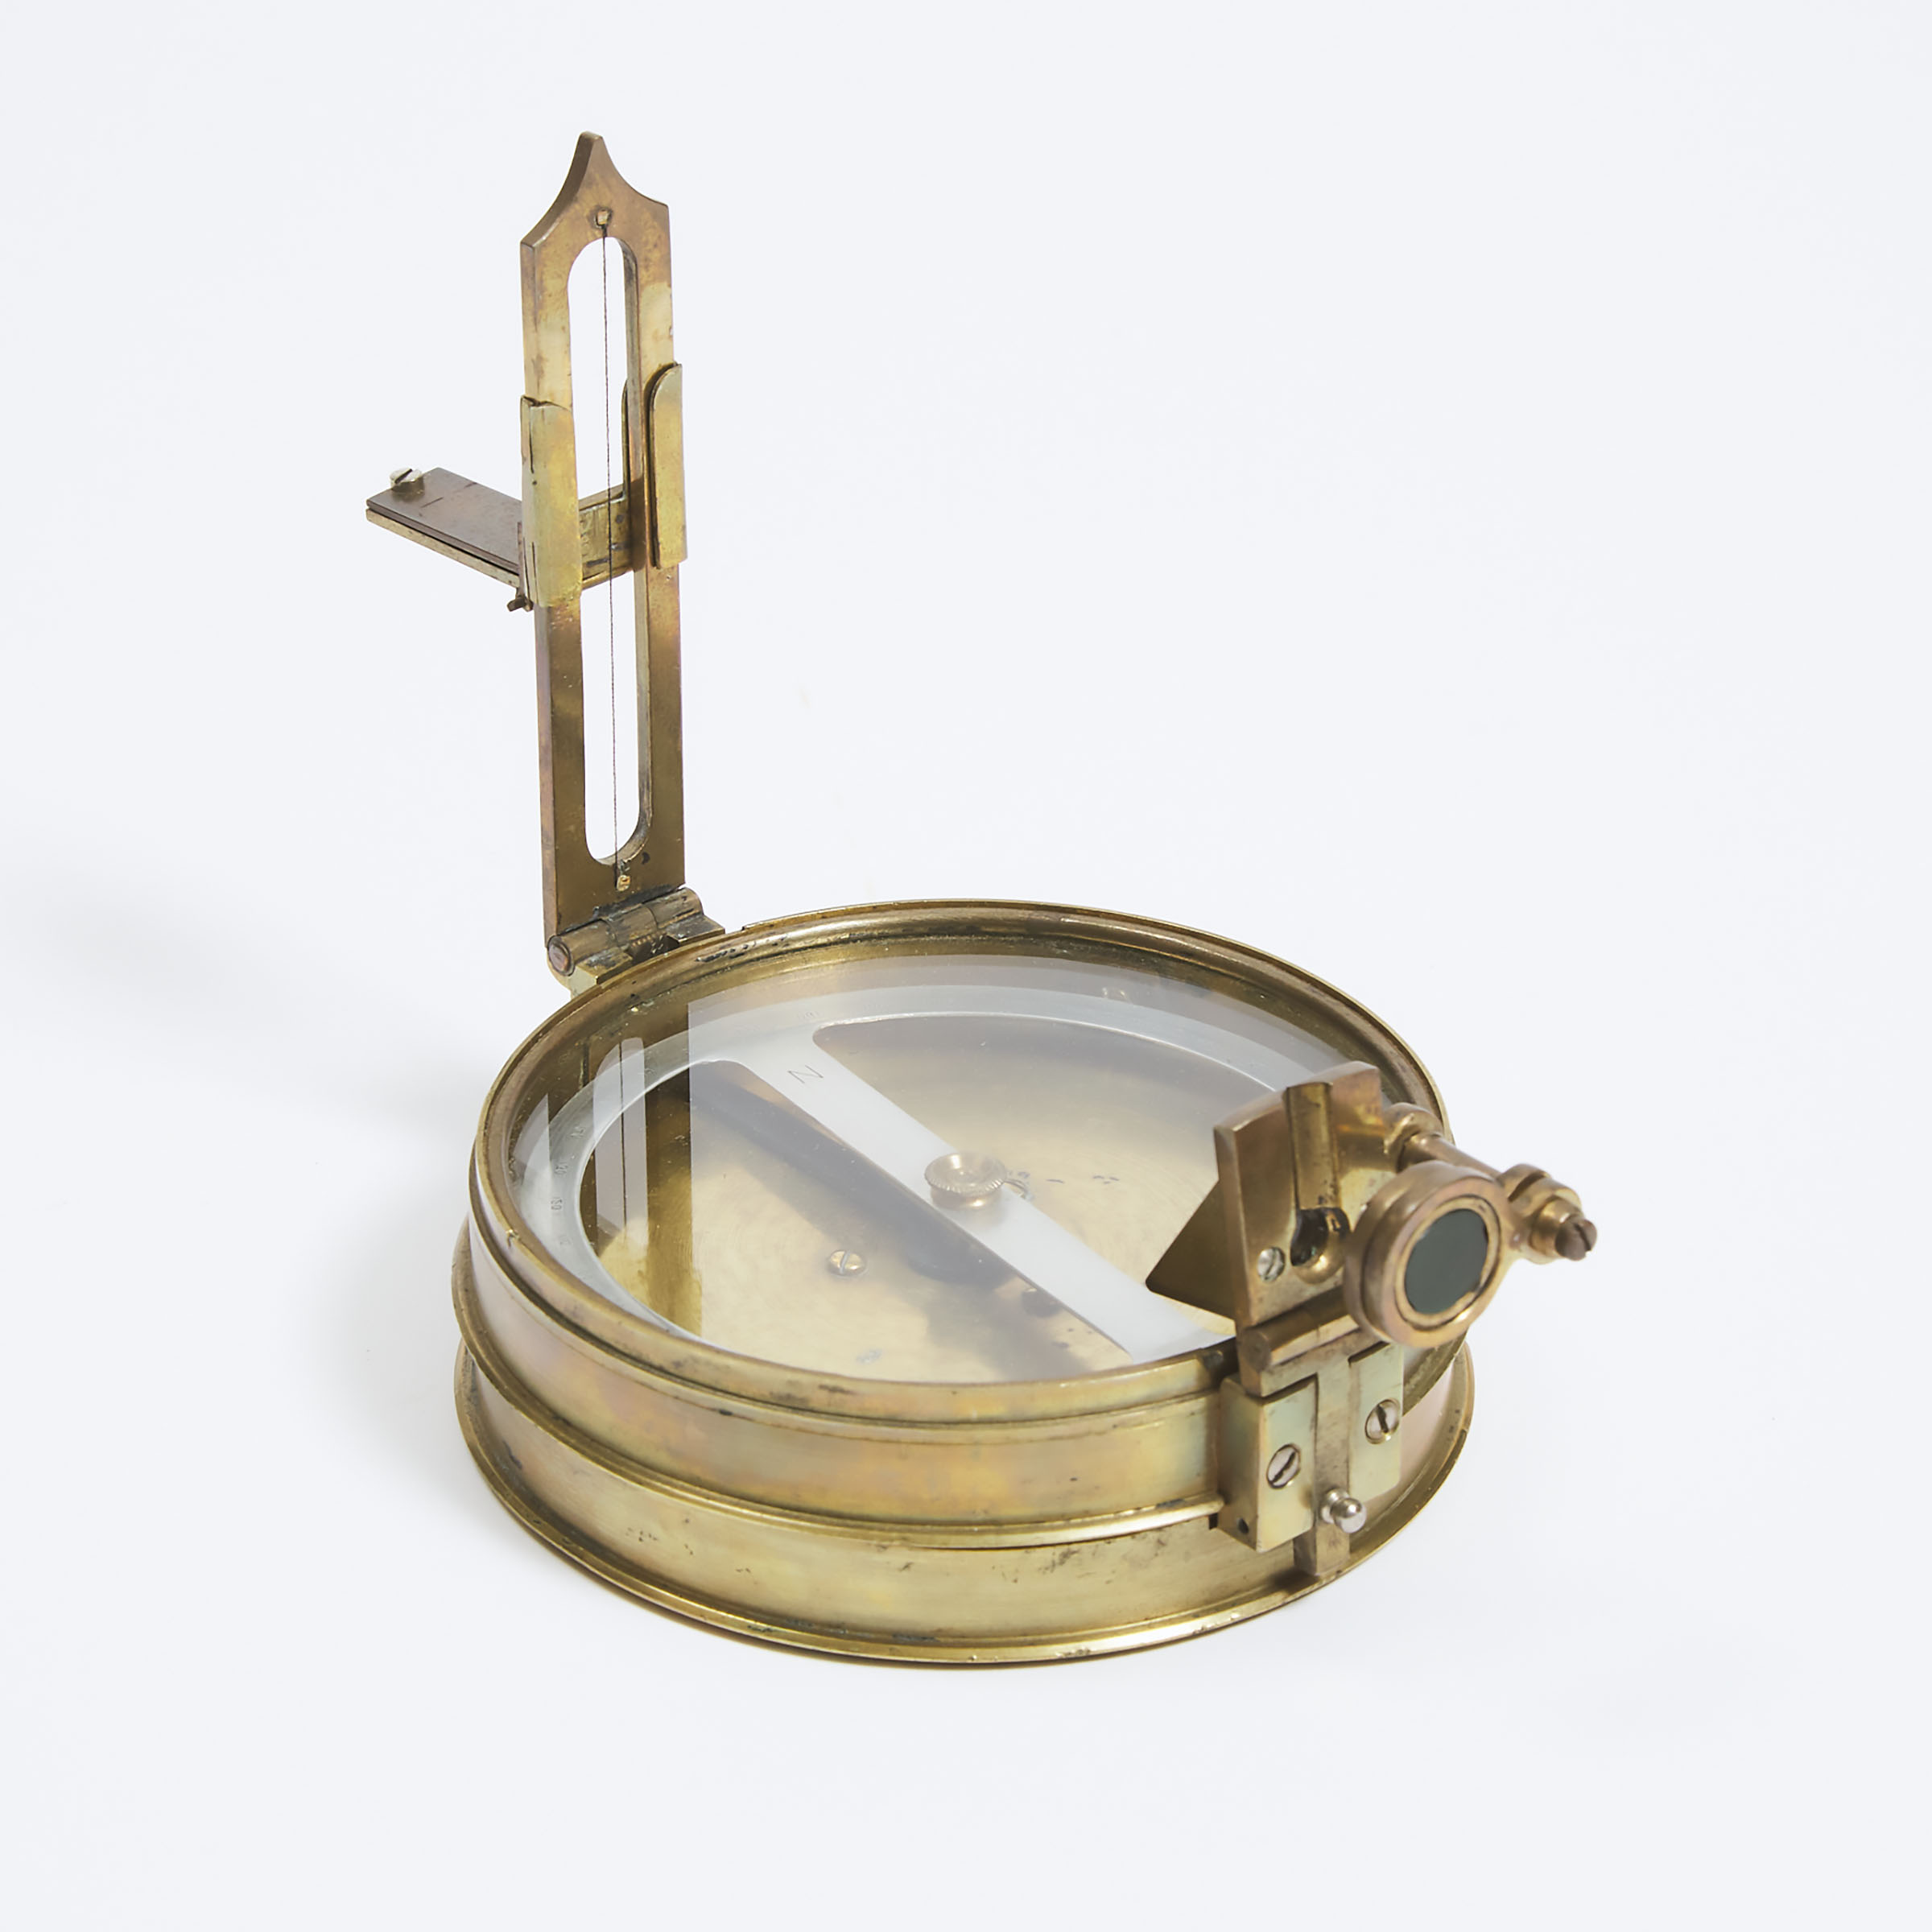 British Colonial Brass Circumferentor Surveyor's Compass, P. Orr & Sons Ltd., Madras, India, late 19th century